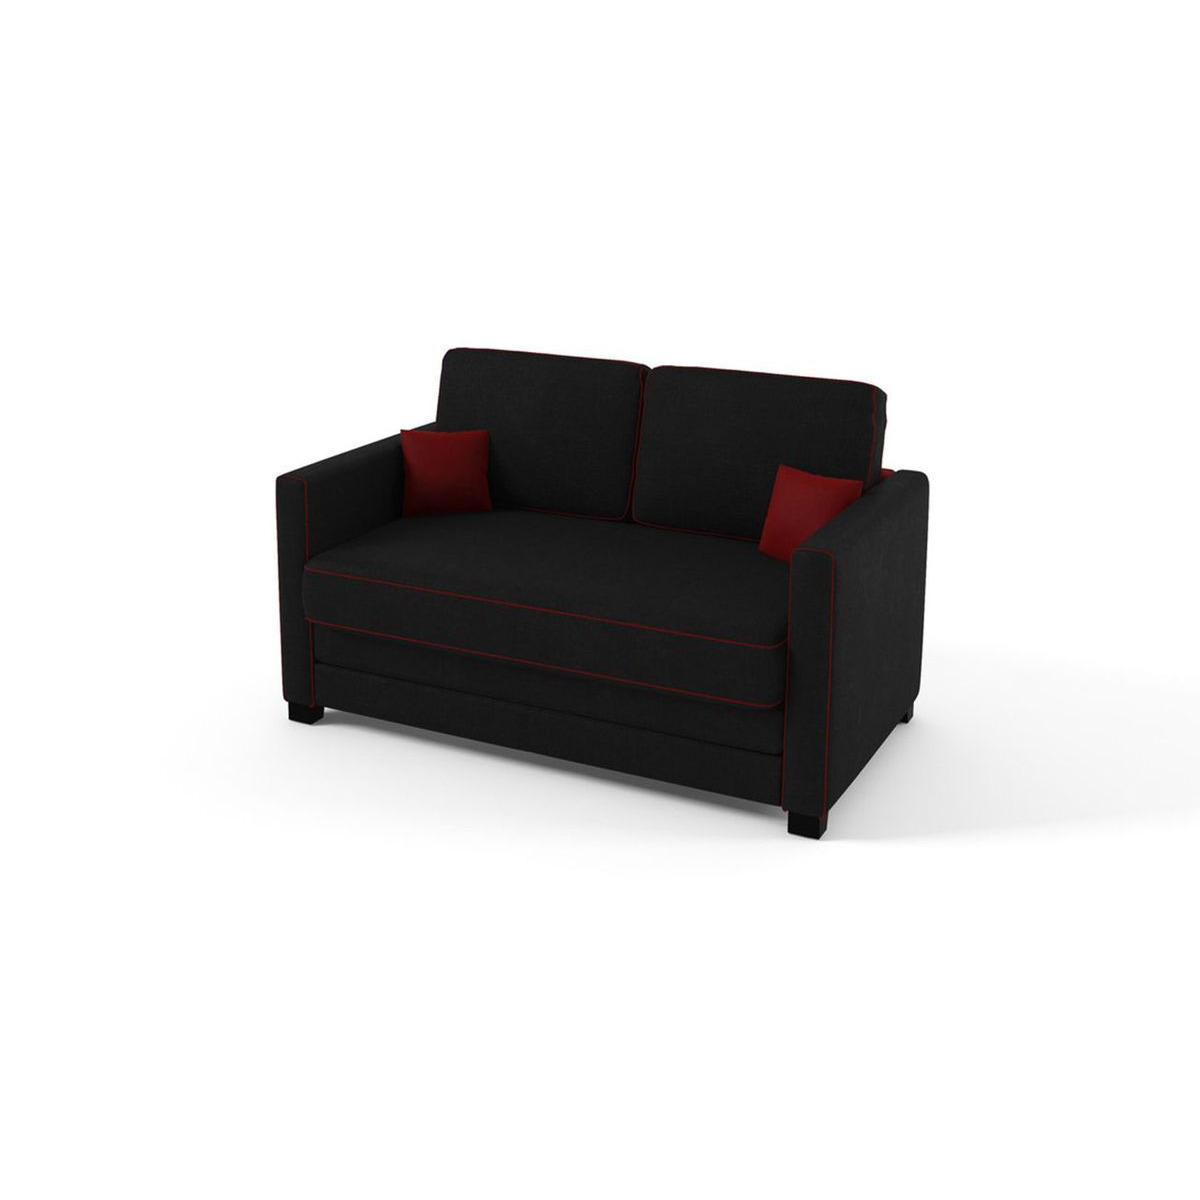 Boom 2 Seater Sofa Bed, black, burgundy - image 1